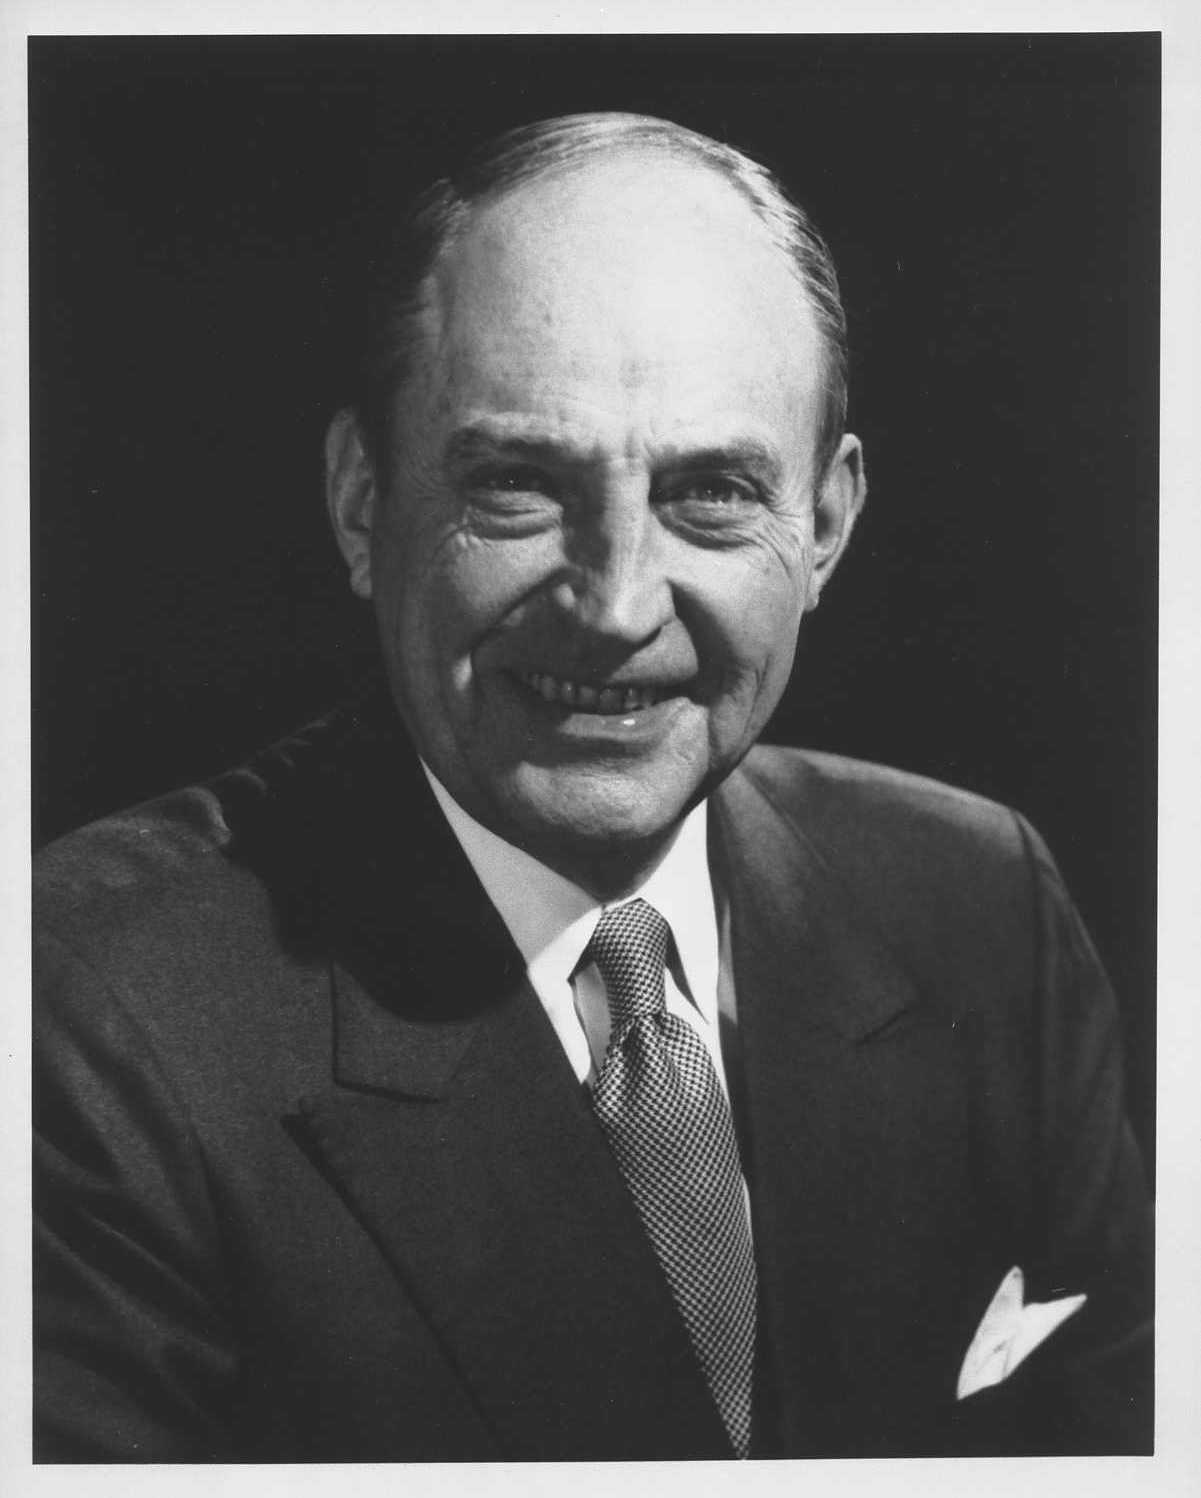 Attorney General William Saxbe